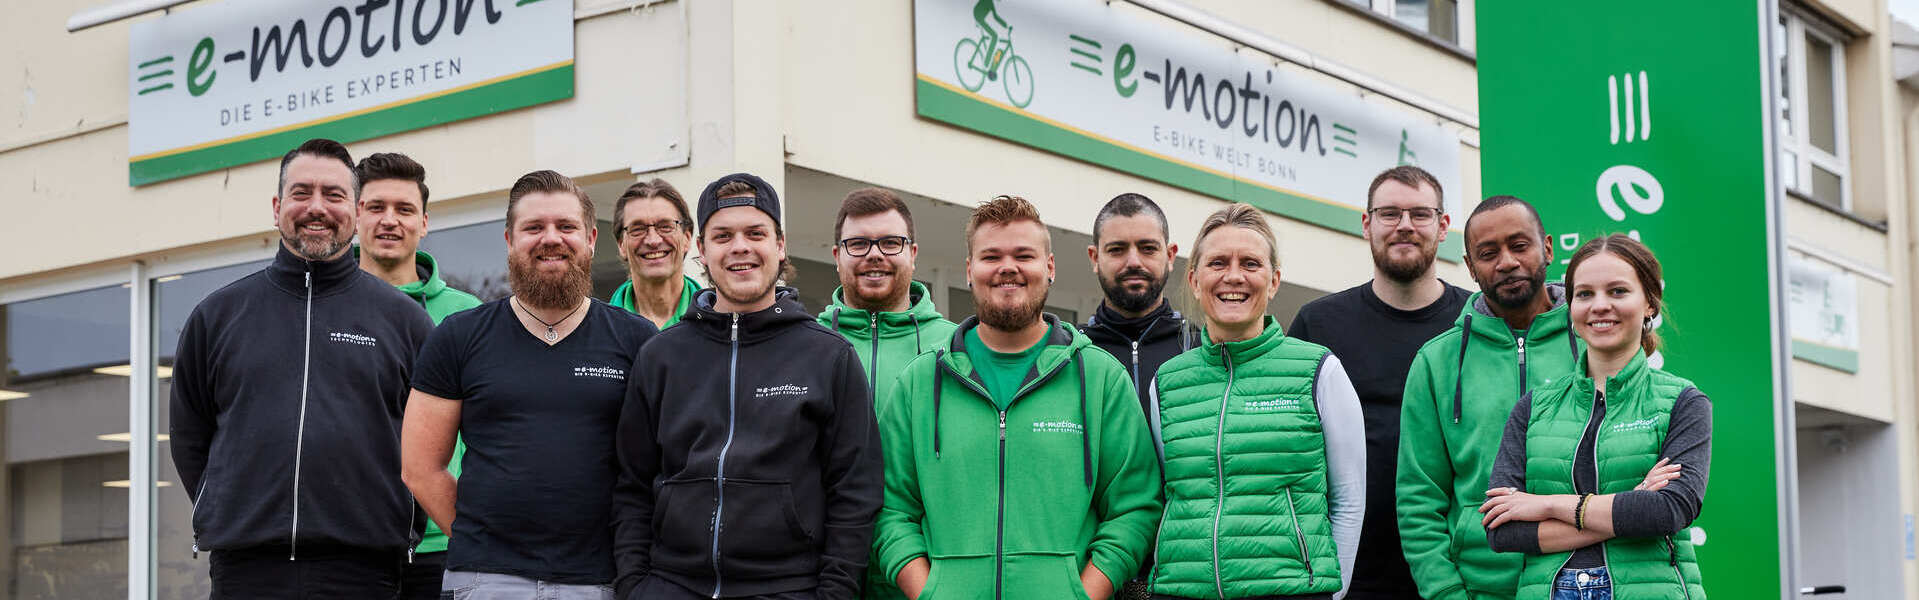 Das Team der e-motion e-Bike Welt Bonn